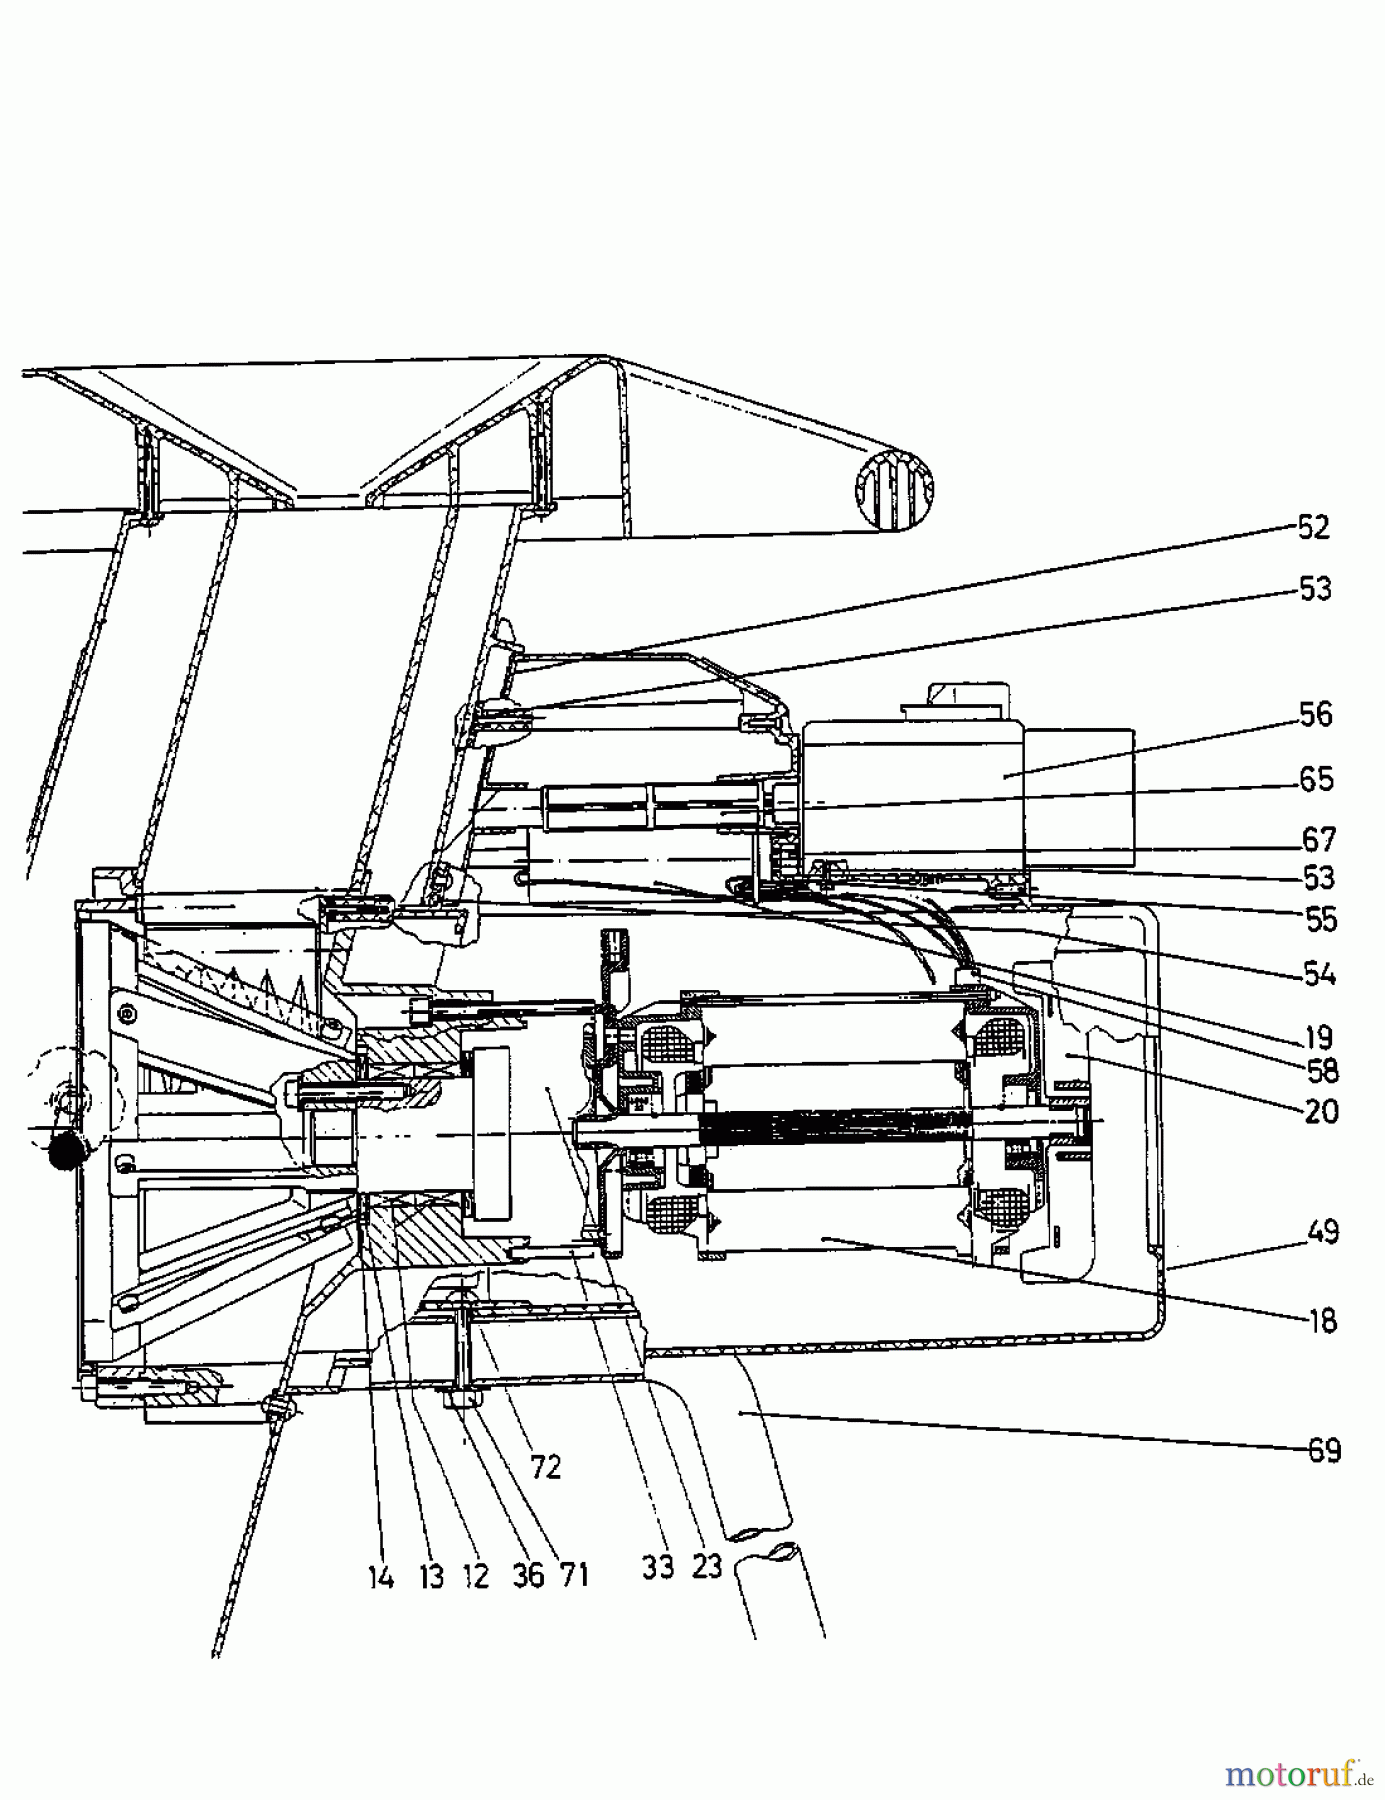  Ikra Chipper LH 2100 F 24A-741N652  (1999) Basic machine